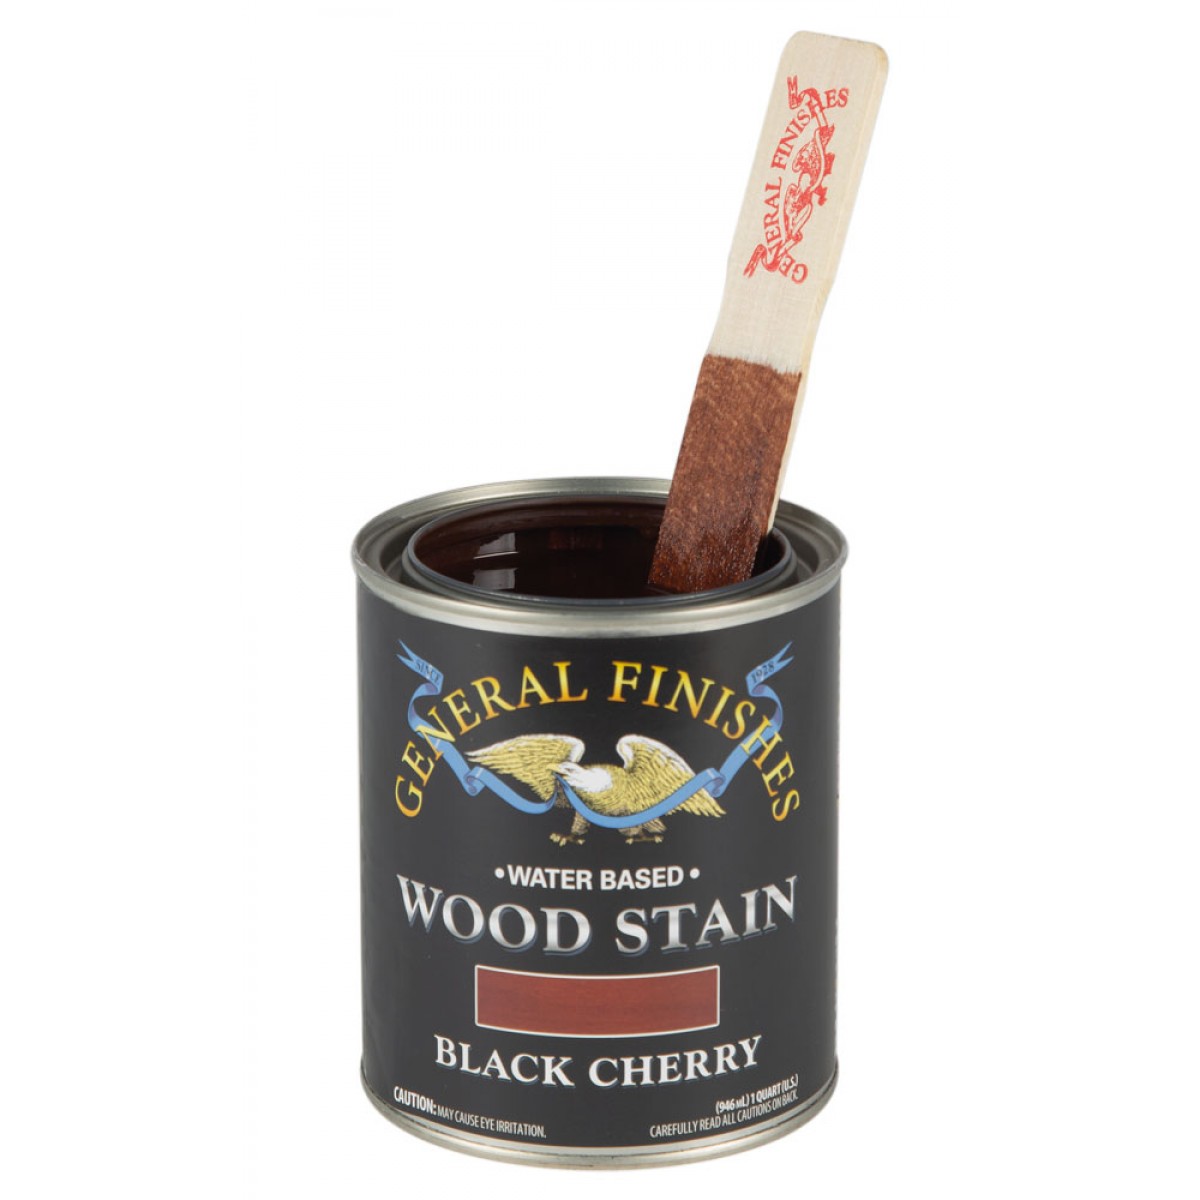 Black cherry wood stain